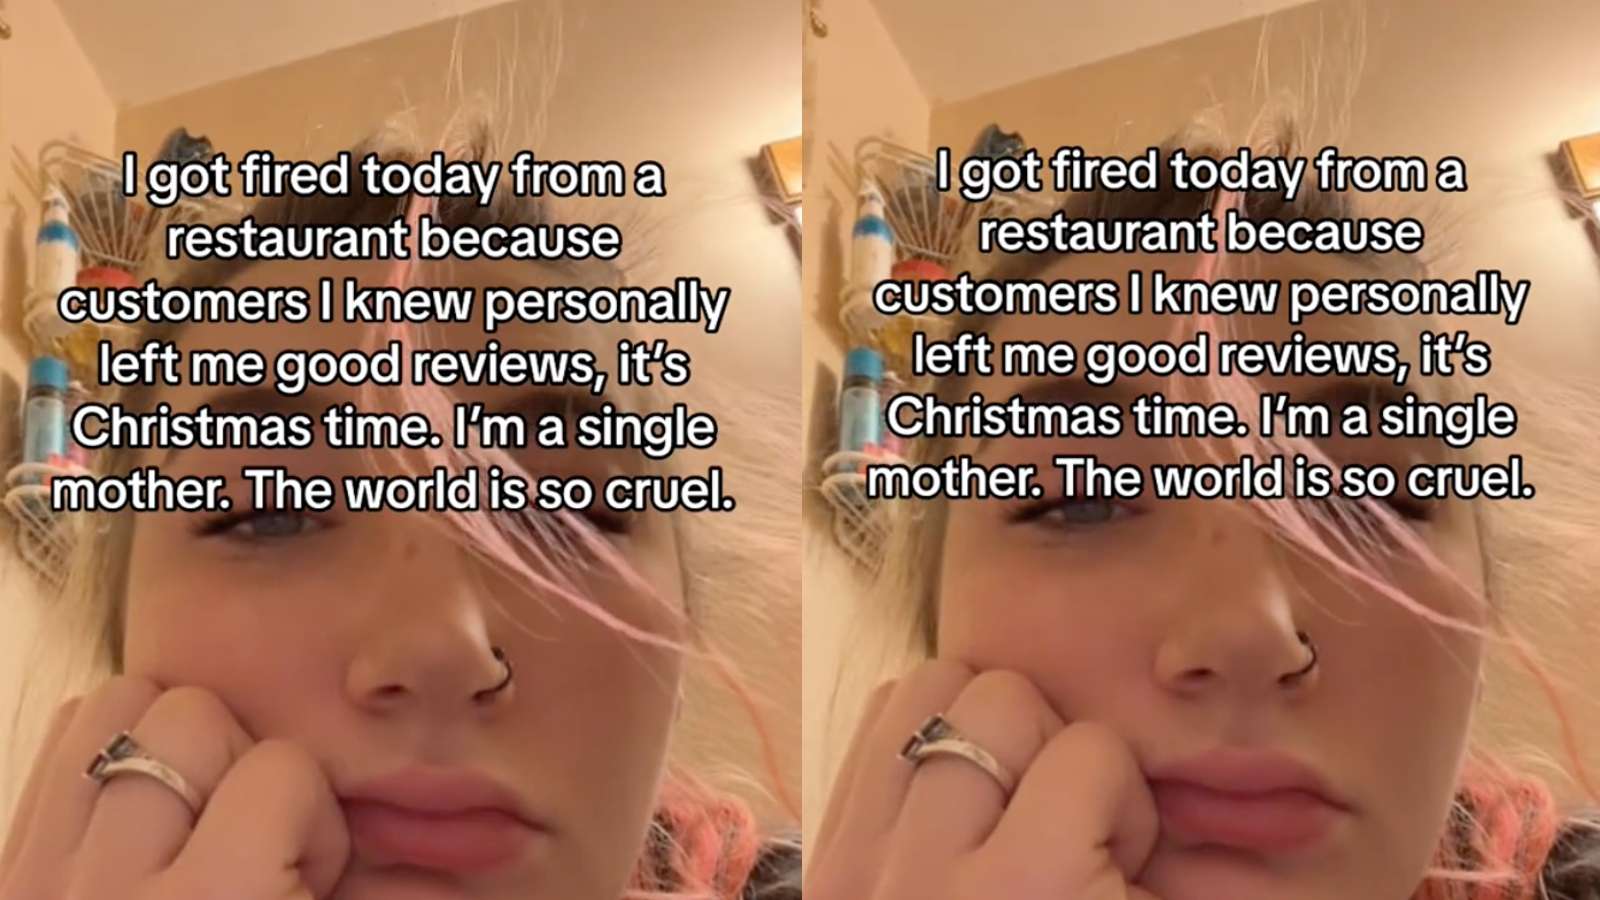 Woman fired from restaurant job